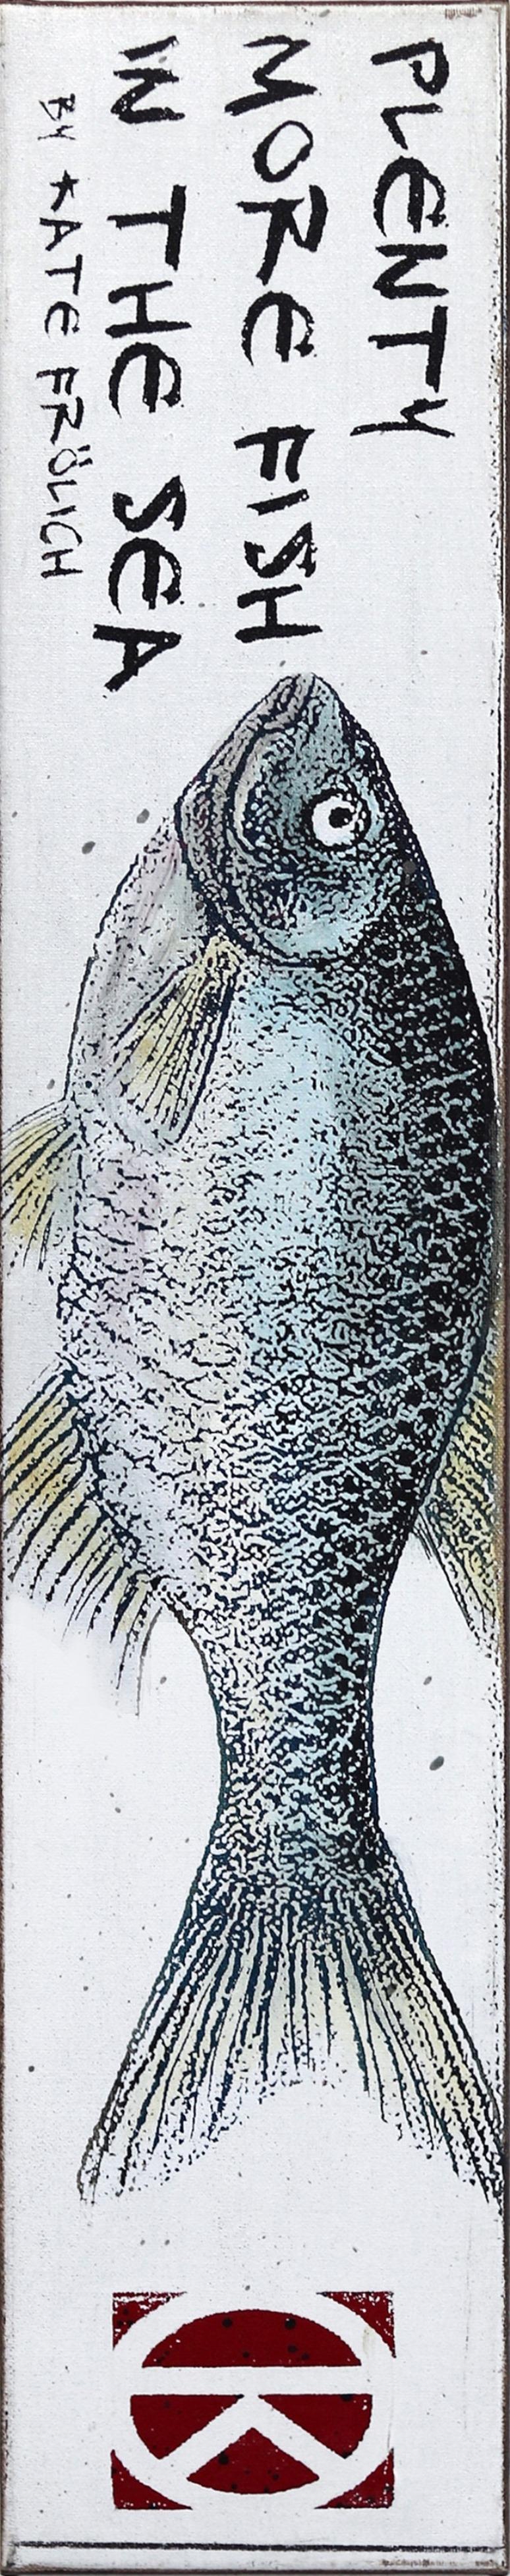 Plenty More Fish - Nature morte aquatique originale monochrome sur toile